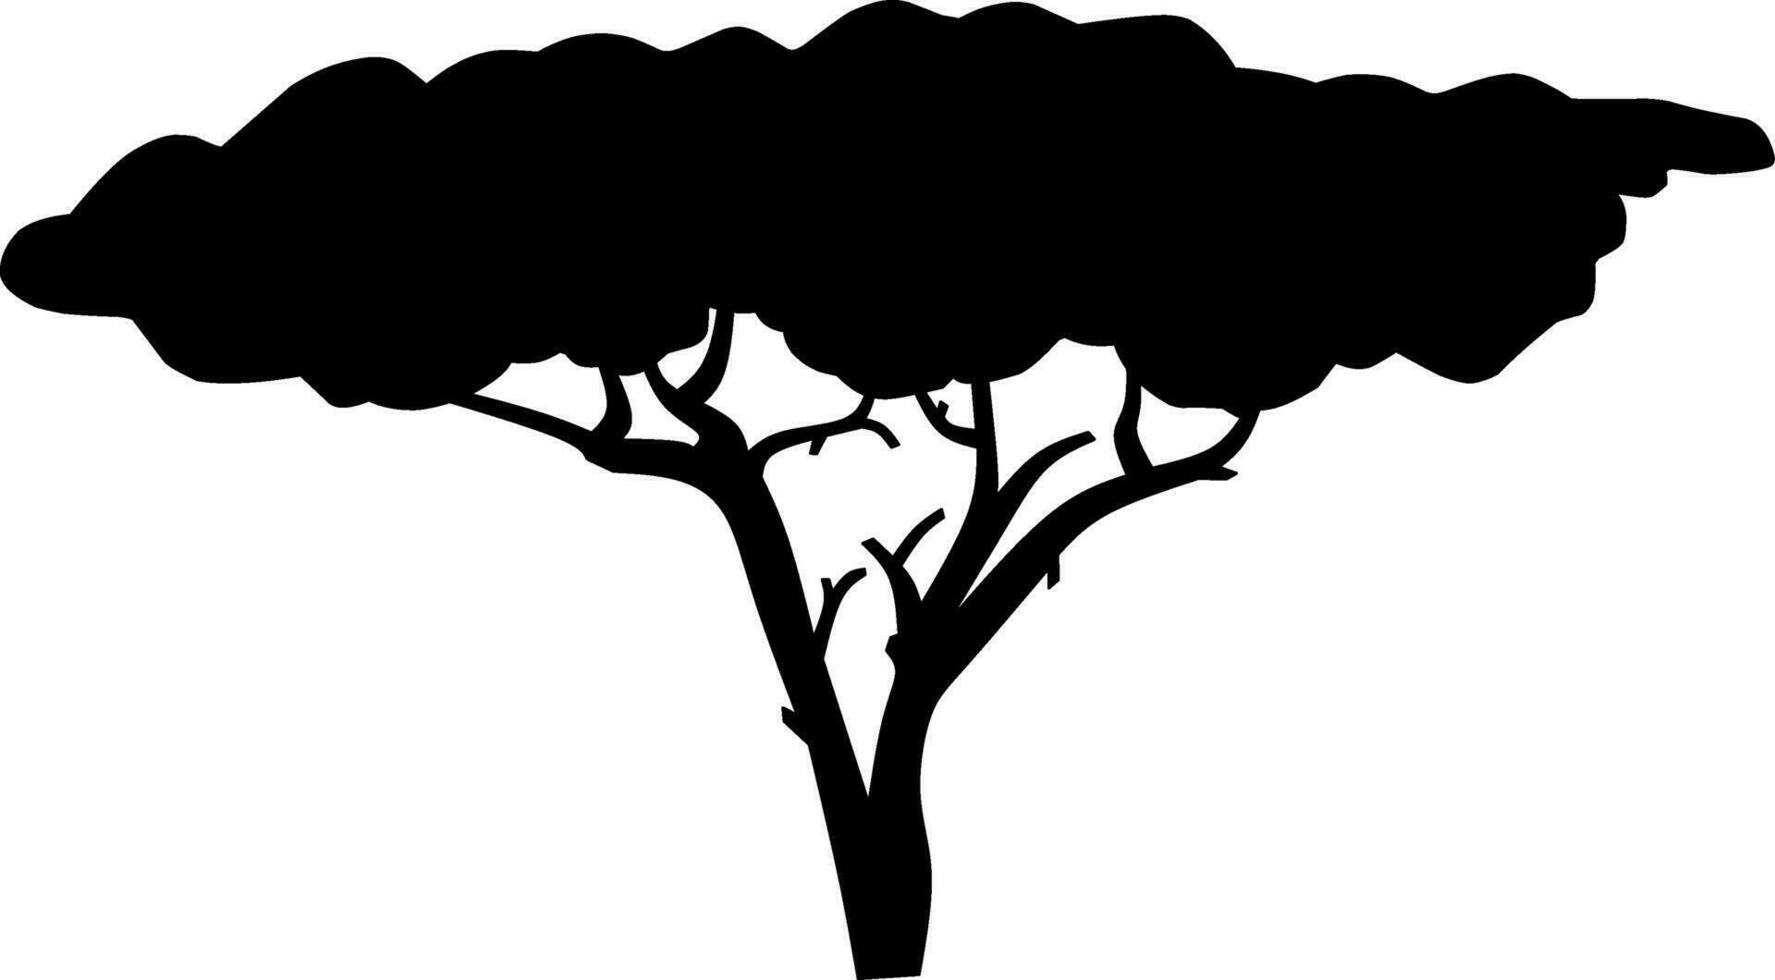 africano árbol icono vector ilustración. africano árbol silueta para icono, símbolo o signo. árbol símbolo para diseño acerca de fauna silvestre, naturaleza, planta, flora, bosque y ecología